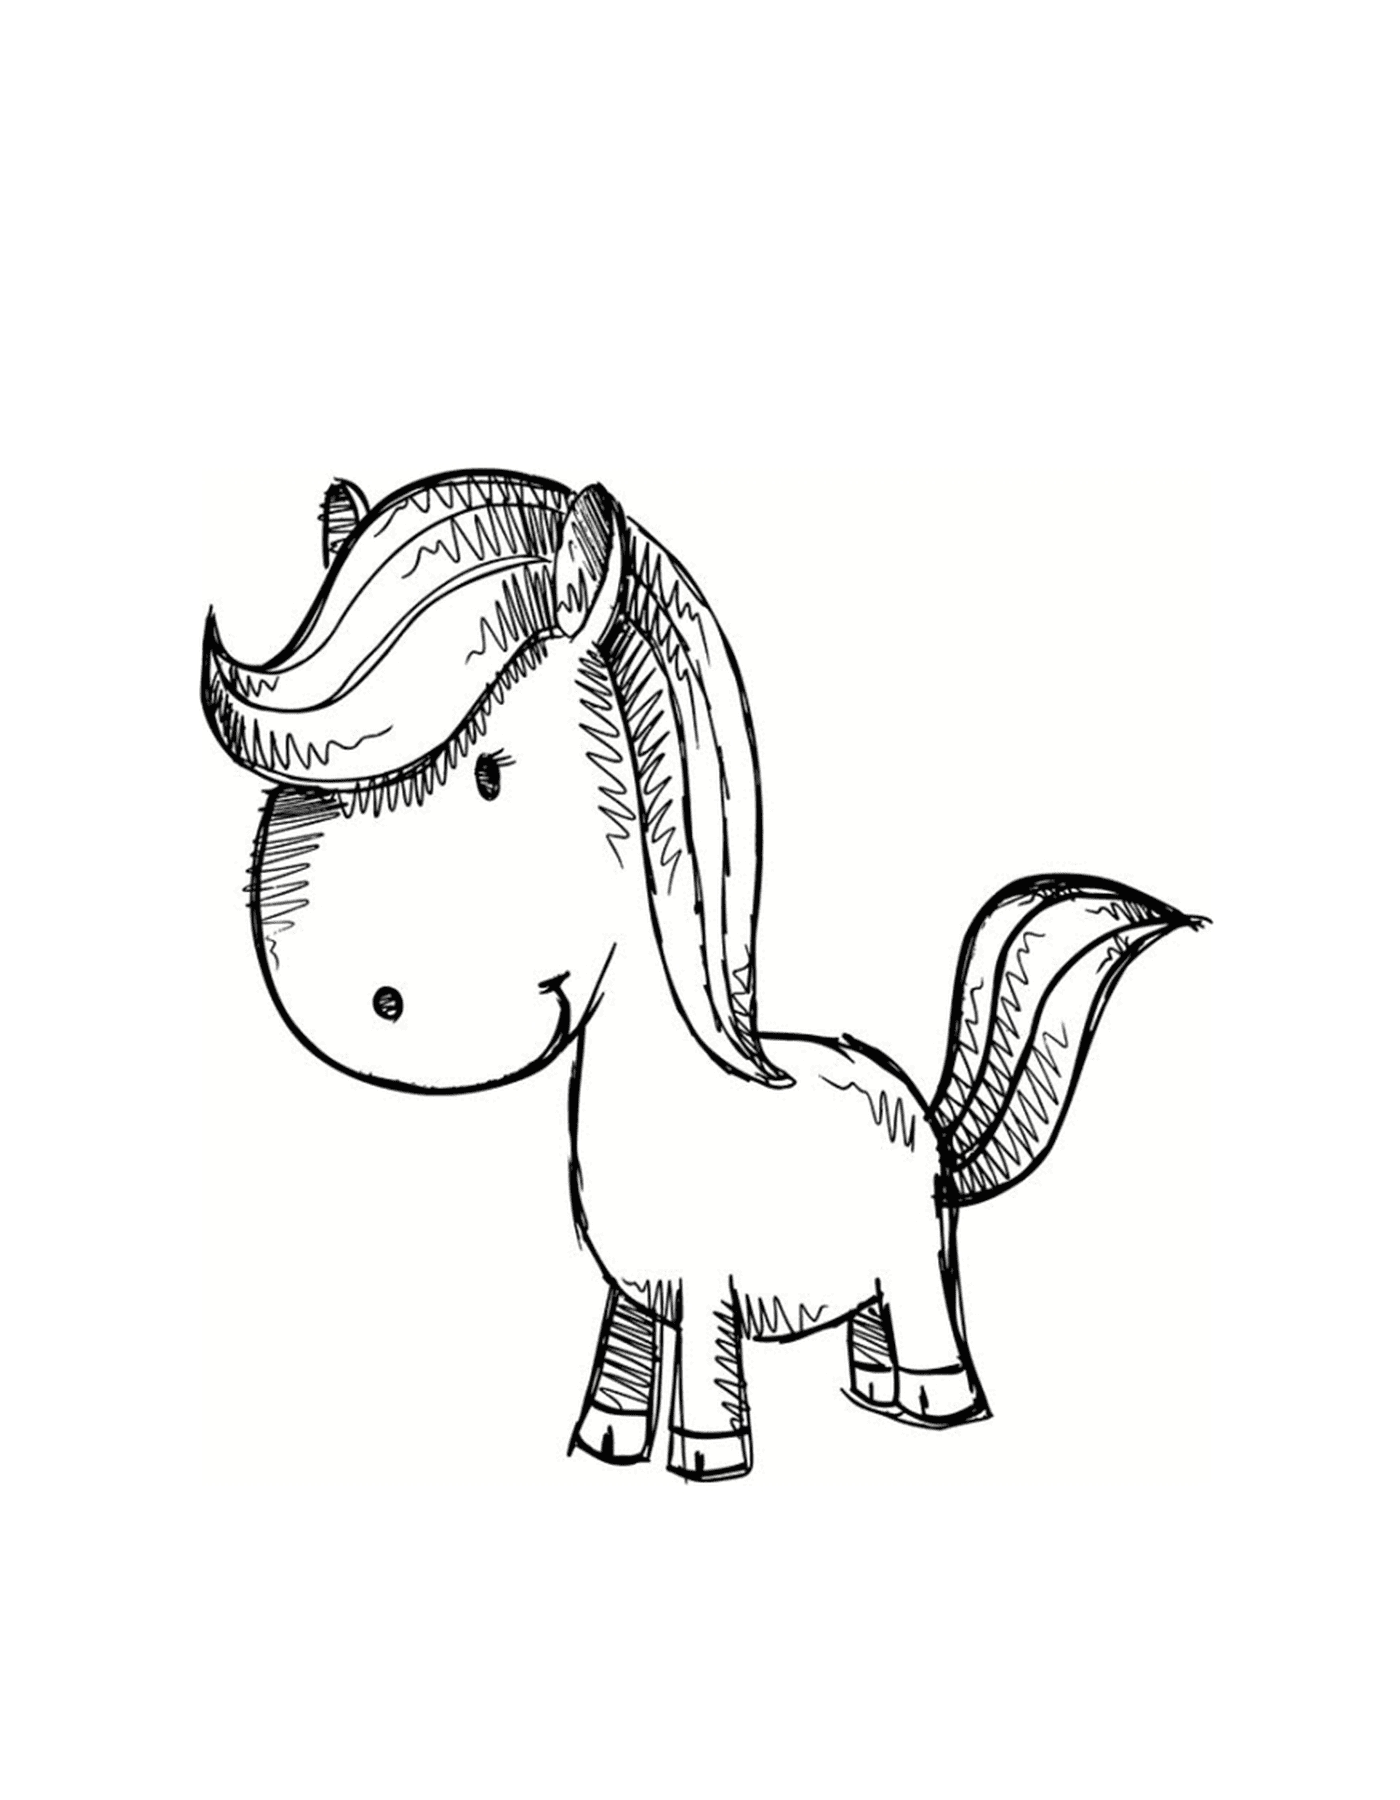  Pony agradável, simplicidade e charme 